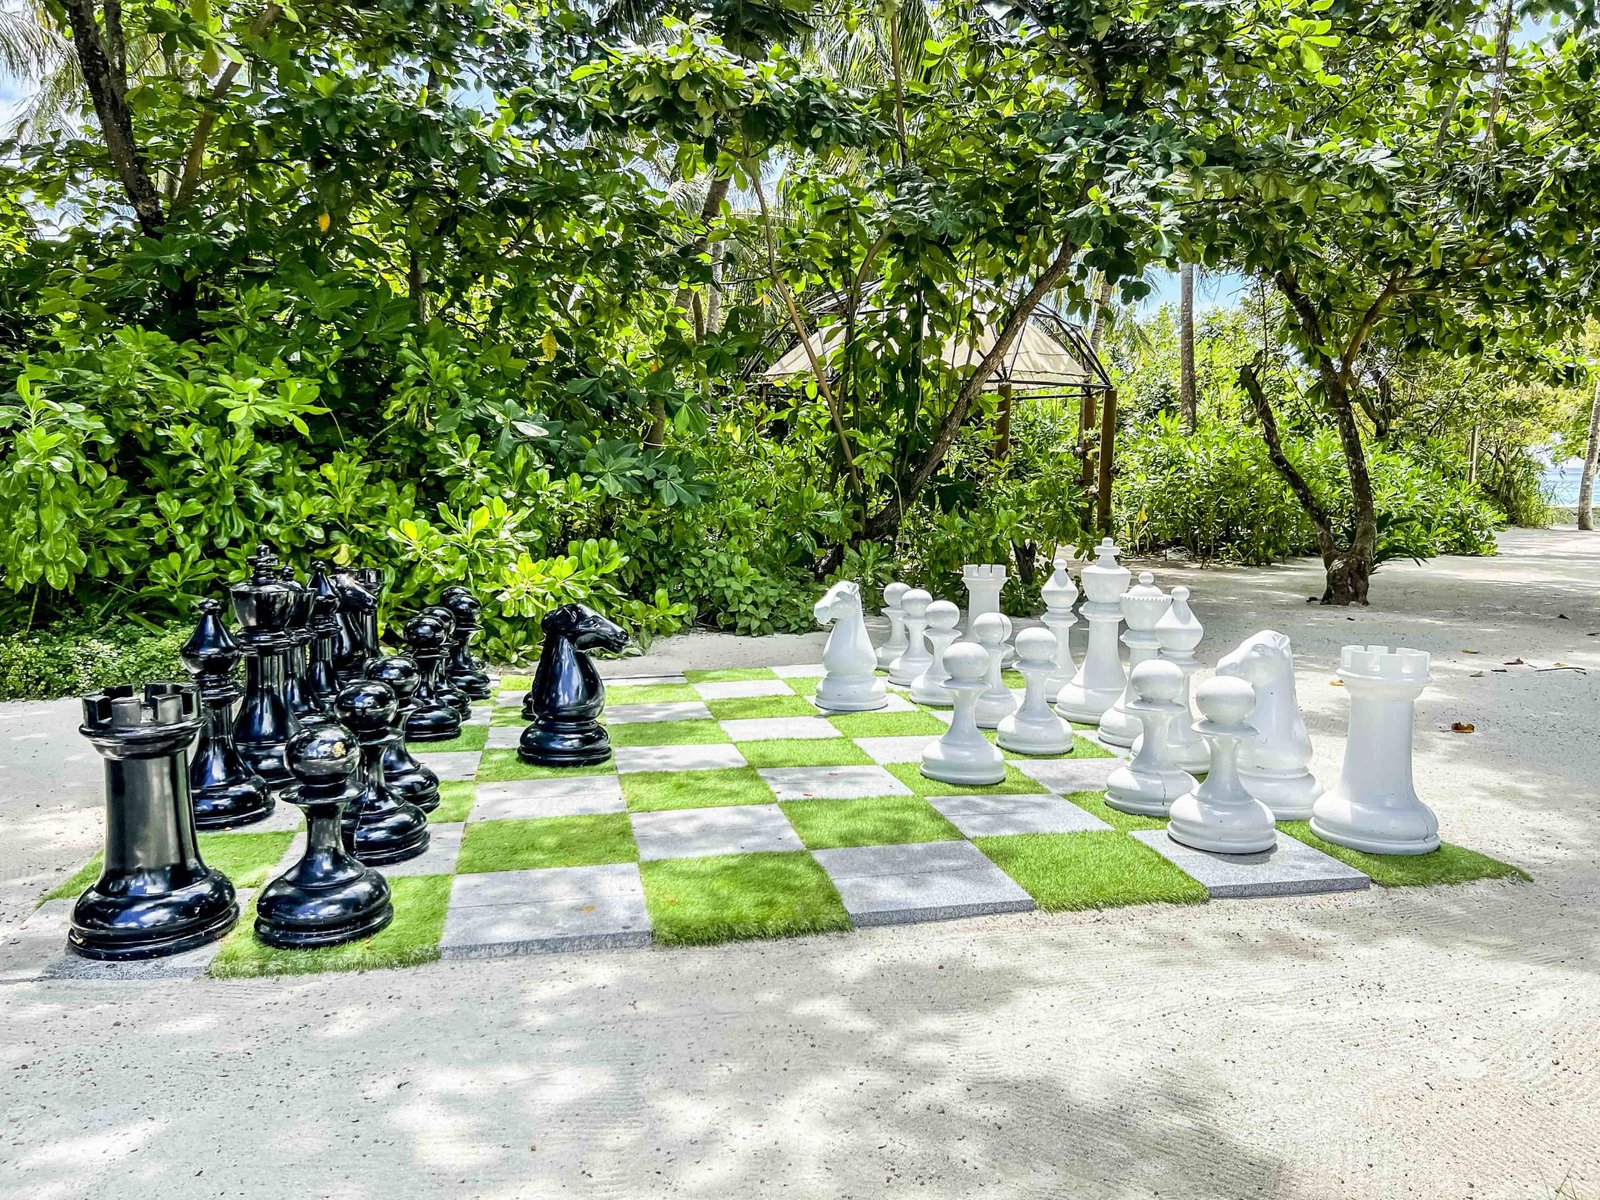 Le Méridien Maldives – Chessboard